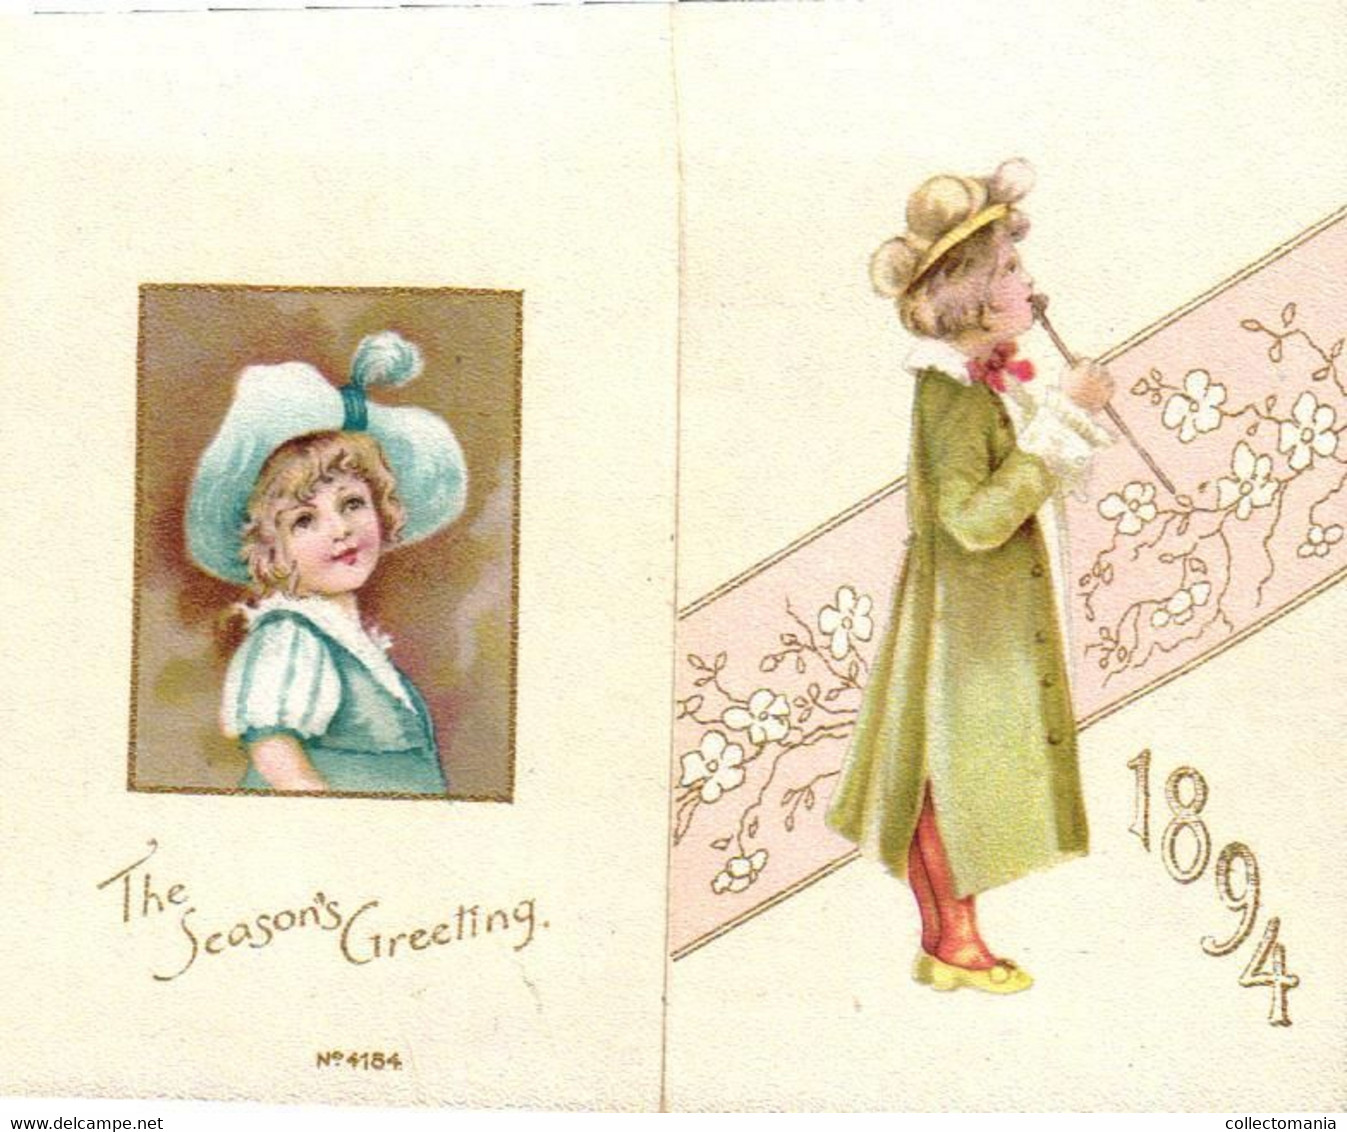 1 Calendar 1894  Bird & Co Engravers Boston  Litho. - Kleinformat : ...-1900